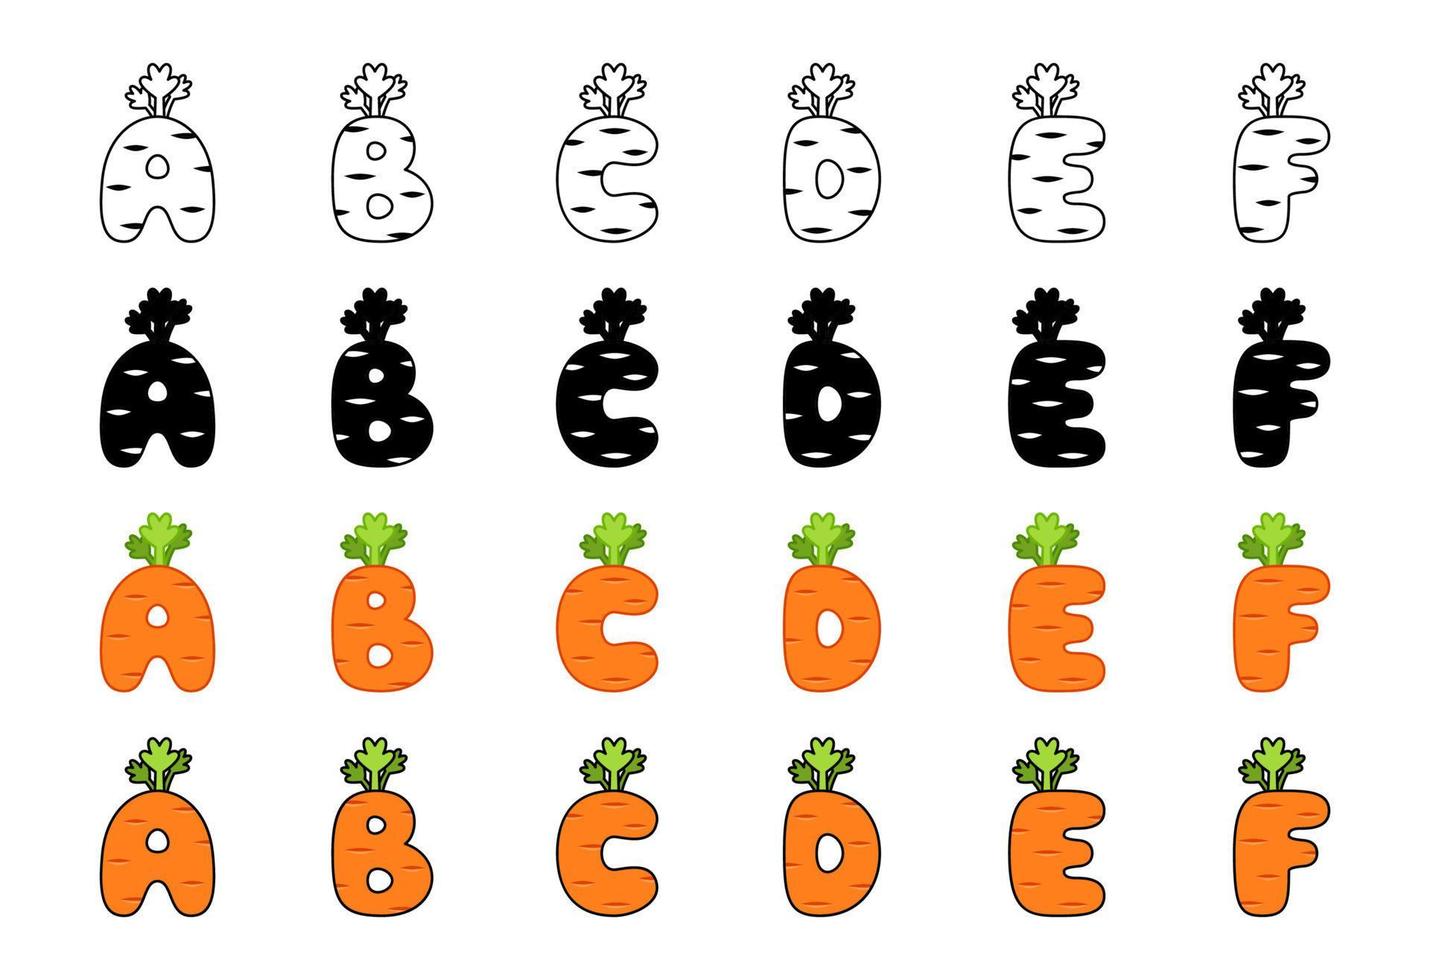 Zanahoria alfabeto en dibujos animados estilo vector